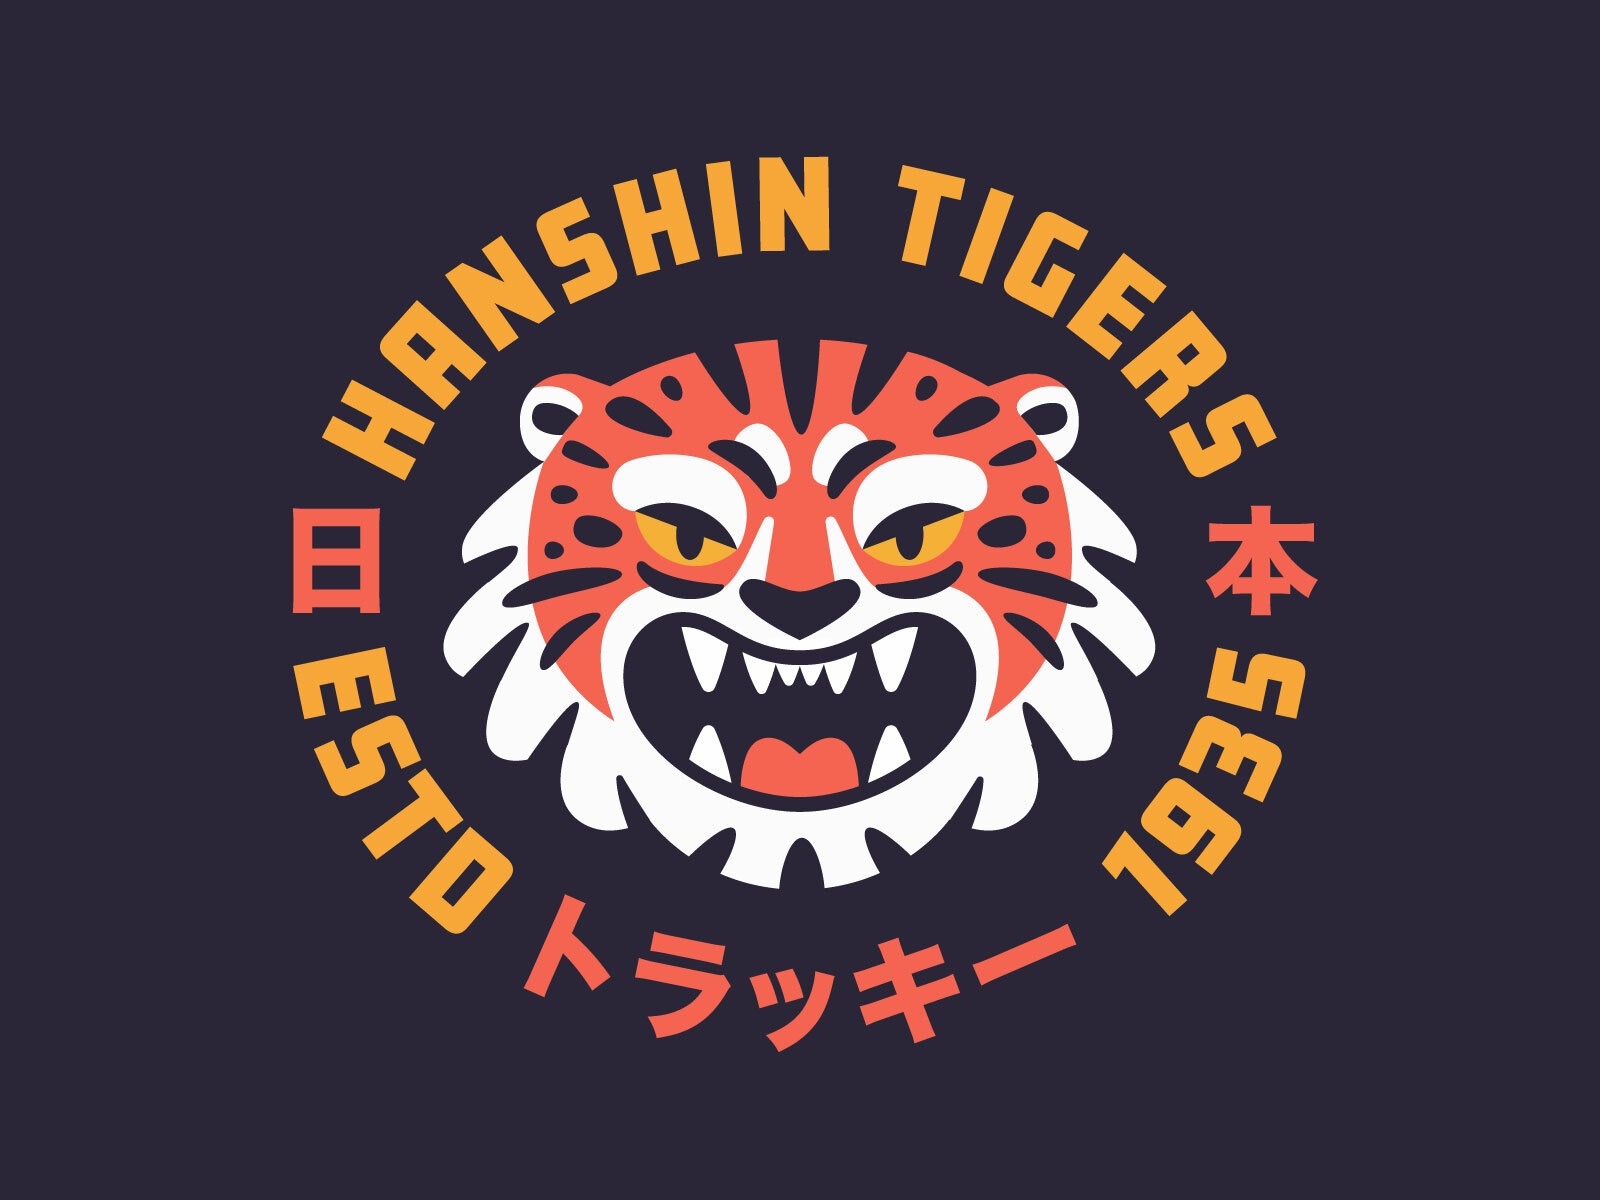 Hanshin Tigers by Nick Slater on Dribbble